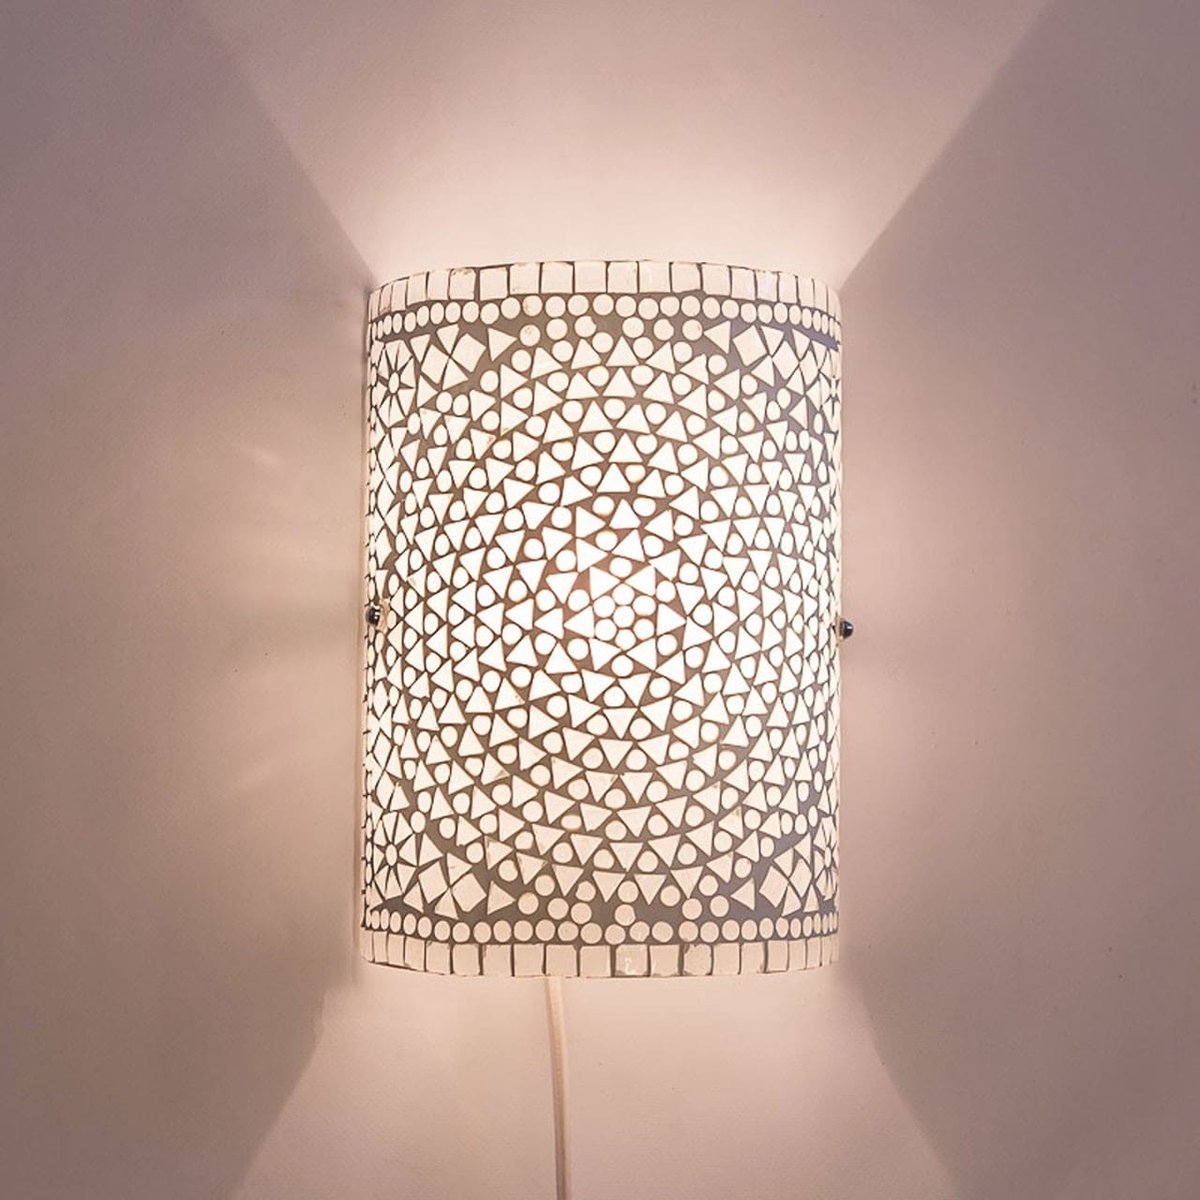 Oosterse mozaïek cilinder wandlamp | 1 lichts | wit | glas / metaal | 26 cm hoog | eetkamer / woonkamer / slaapkamer lamp | traditioneel / landelijk / sfeervol design